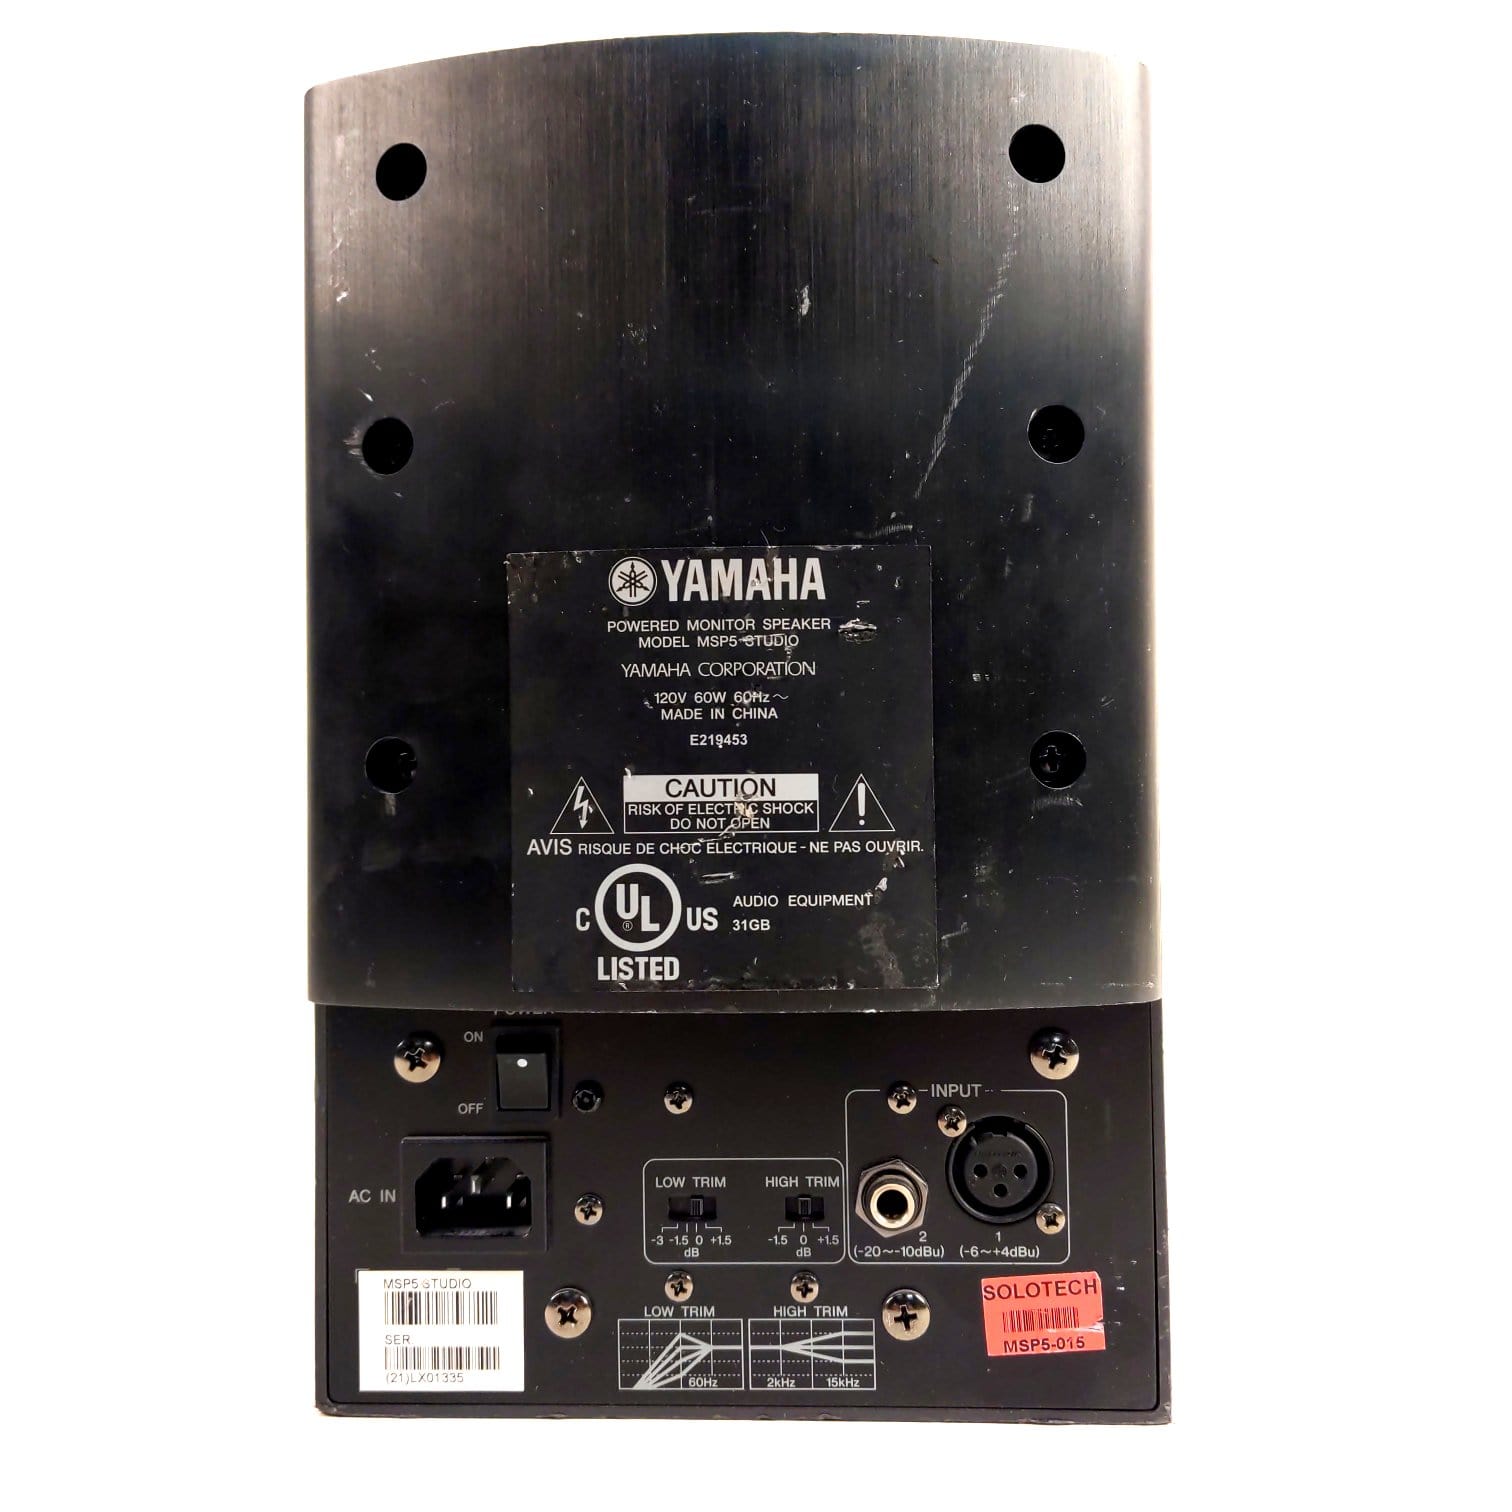 Yamaha MSP5 2-Way Bi-amplified Speaker Monitor